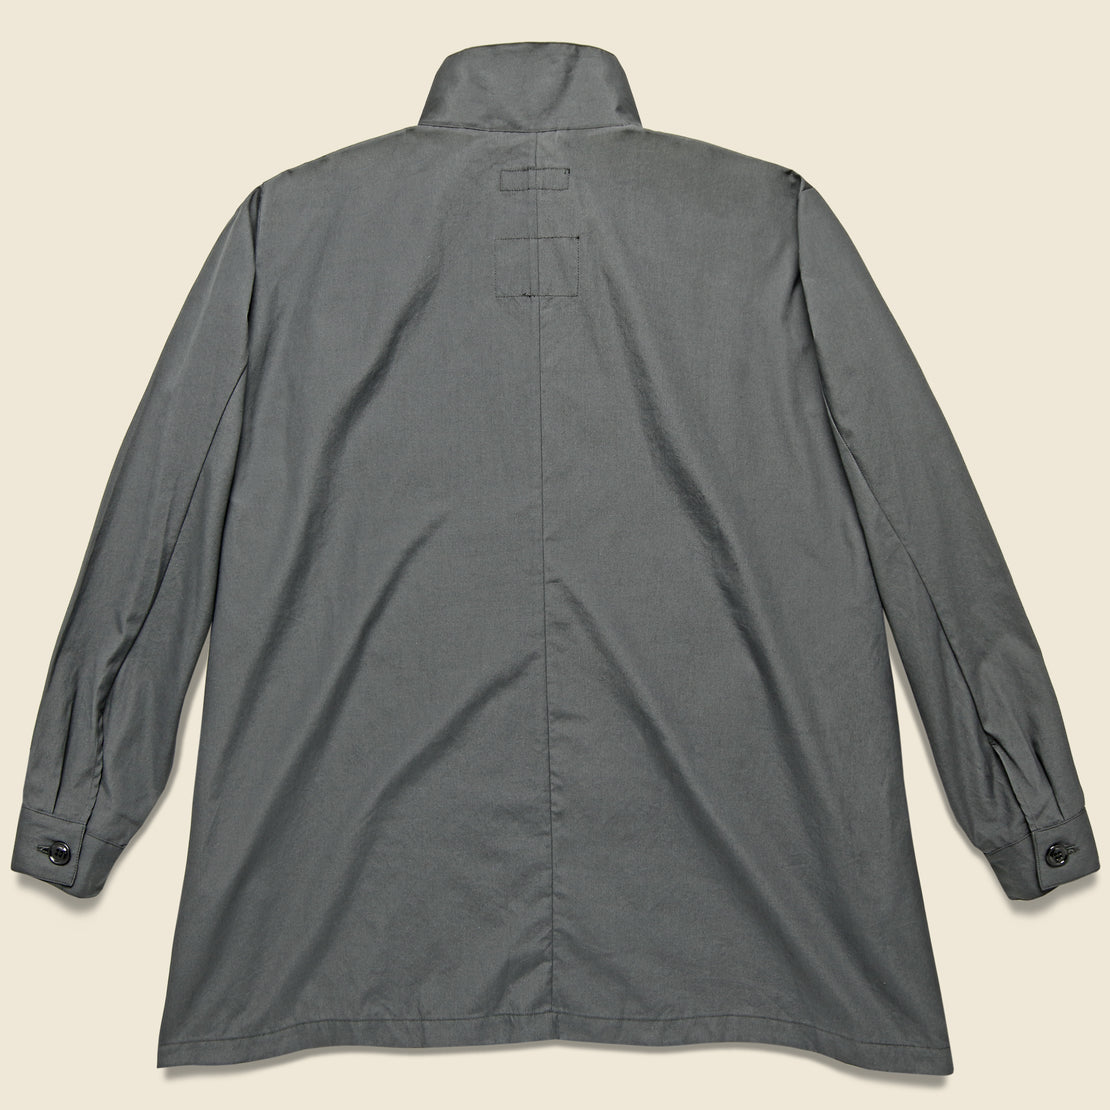 Vancloth Oxford Batman Shirt - Charcoal - Monitaly - STAG Provisions - W - Tops - L/S Woven